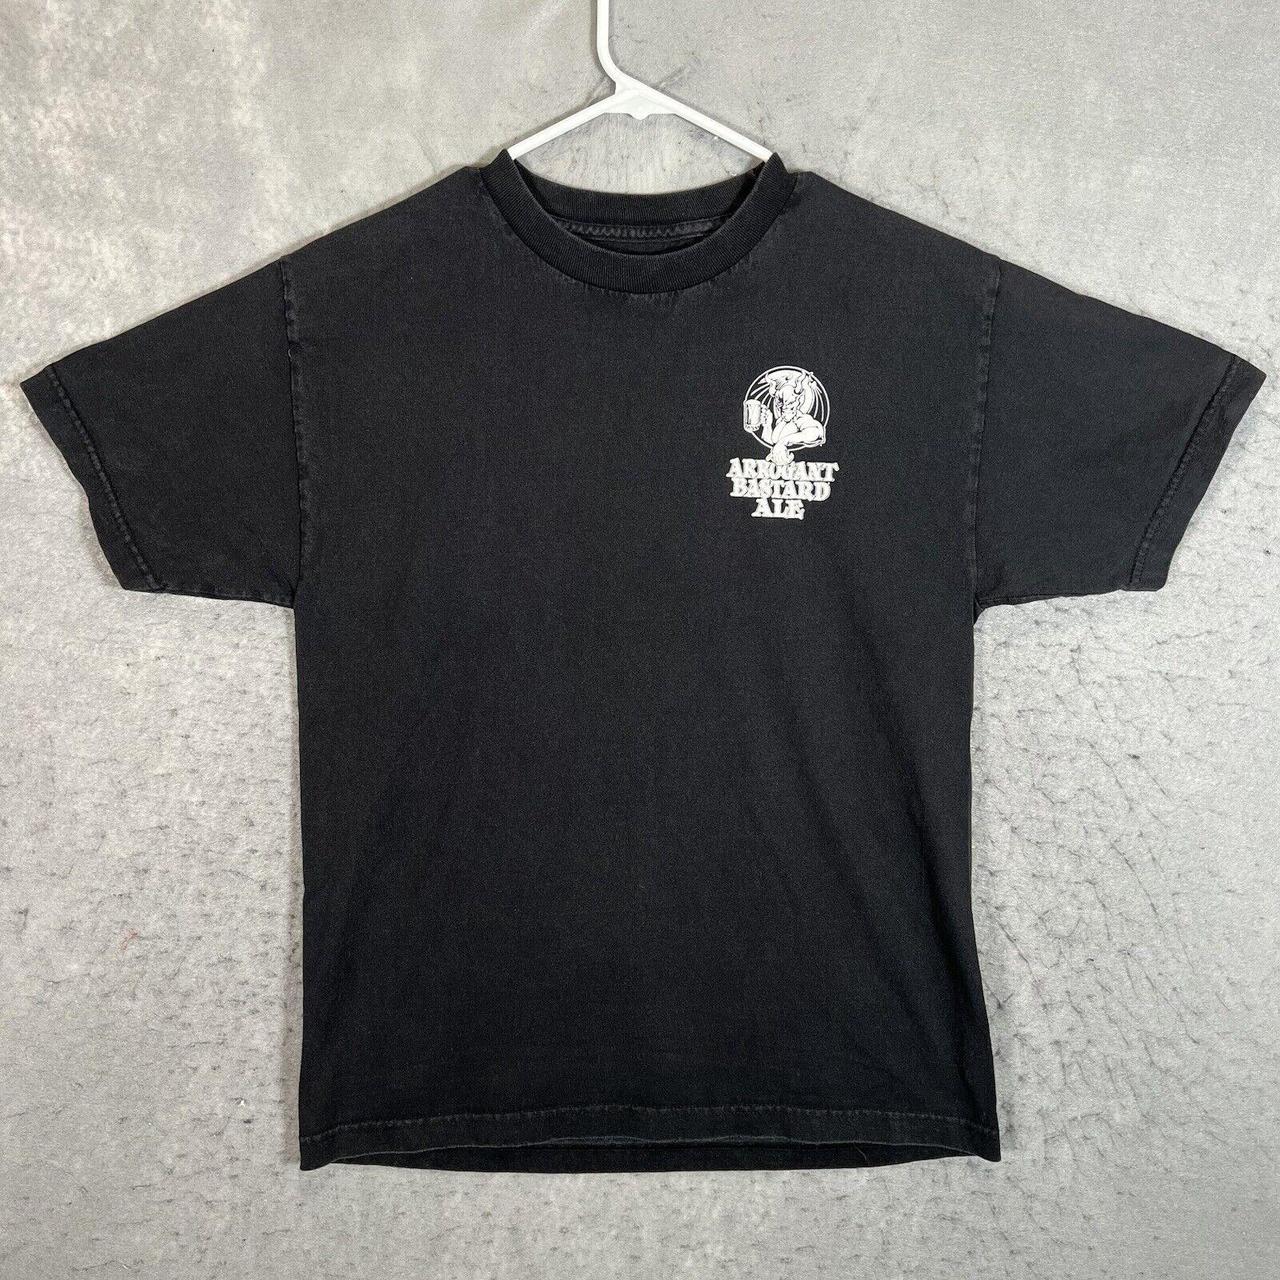 CO Men's Black T-shirt (2)